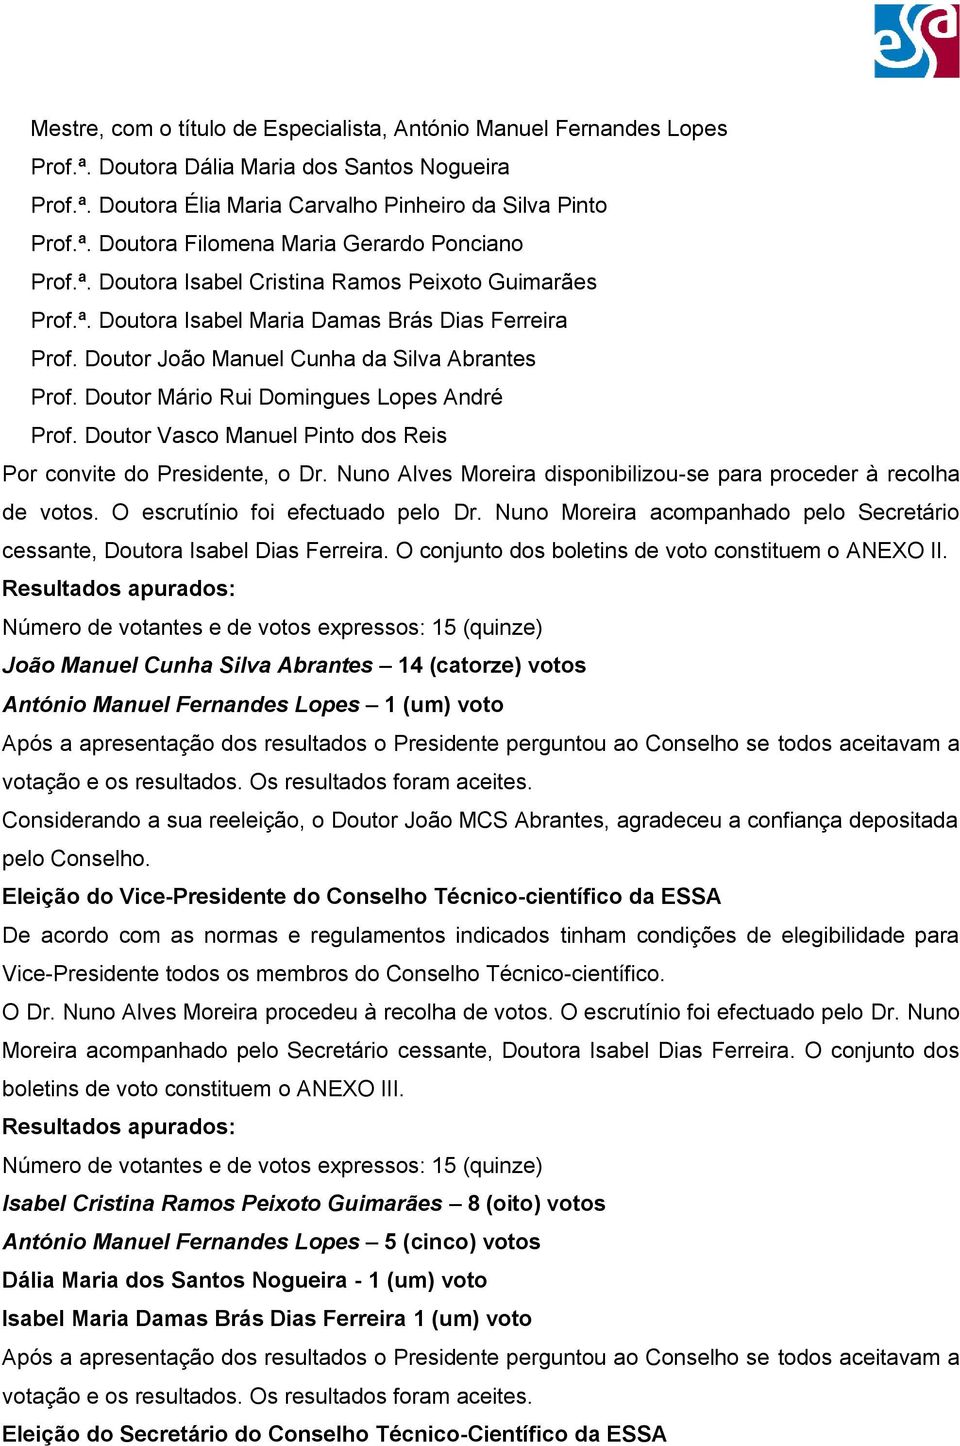 Doutor Mário Rui Domingues Lopes André Por convite do Presidente, o Dr. Nuno Alves Moreira disponibilizou-se para proceder à recolha de votos. O escrutínio foi efectuado pelo Dr.